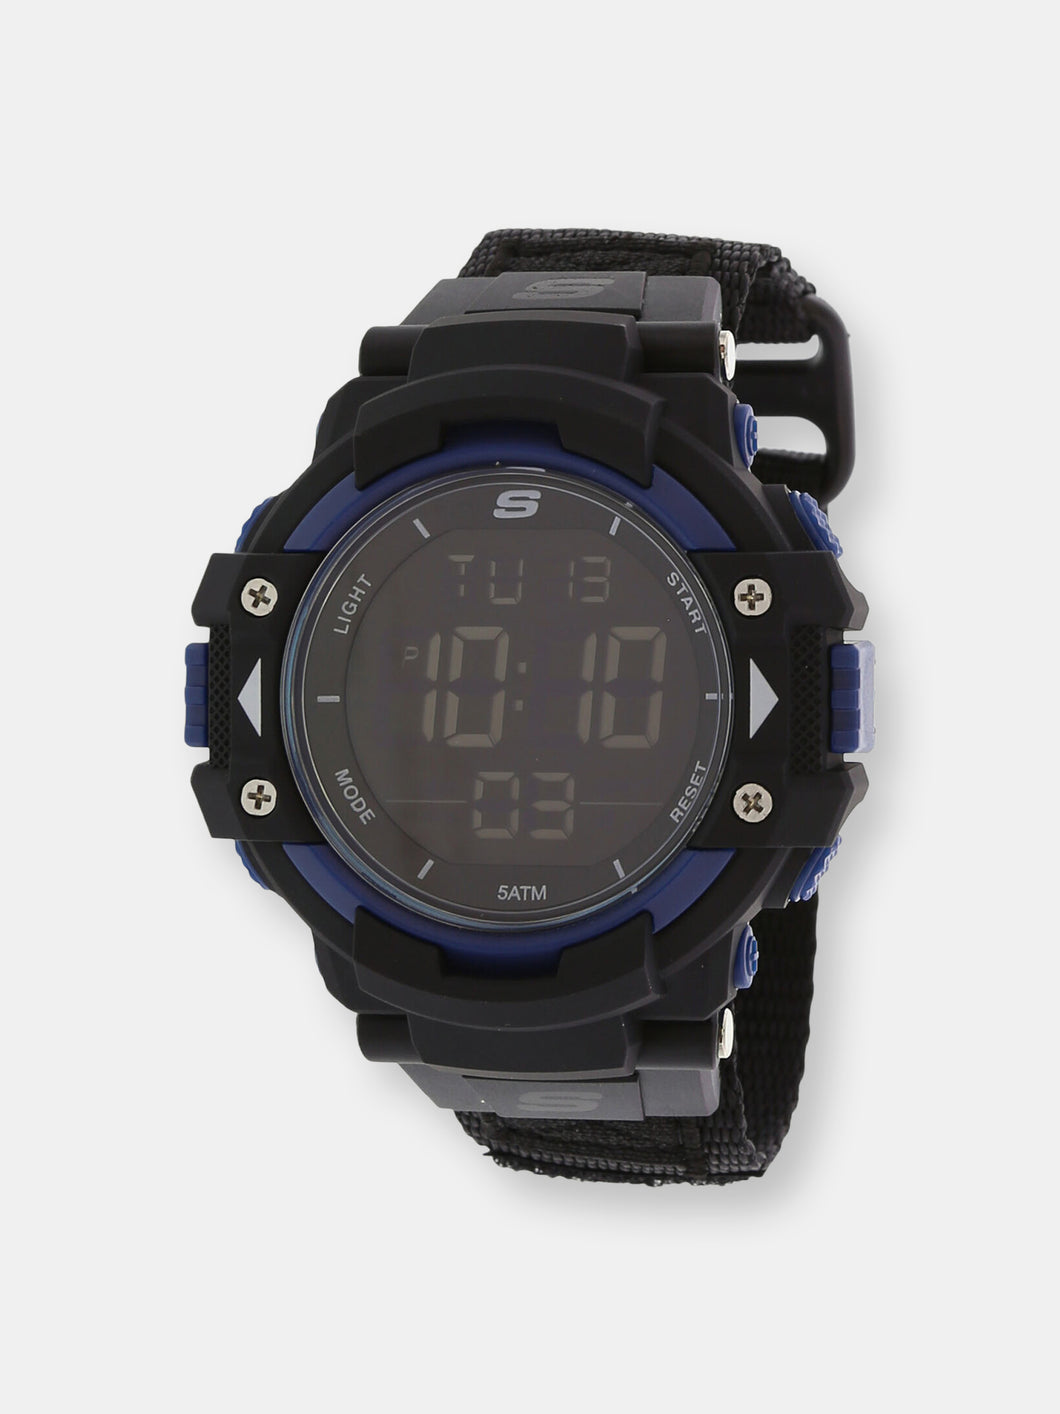 Skechers Watch SR1035 Keats Sport Digital Display, 24 Hour Time, Back Light, Chronograph, Alarm Black